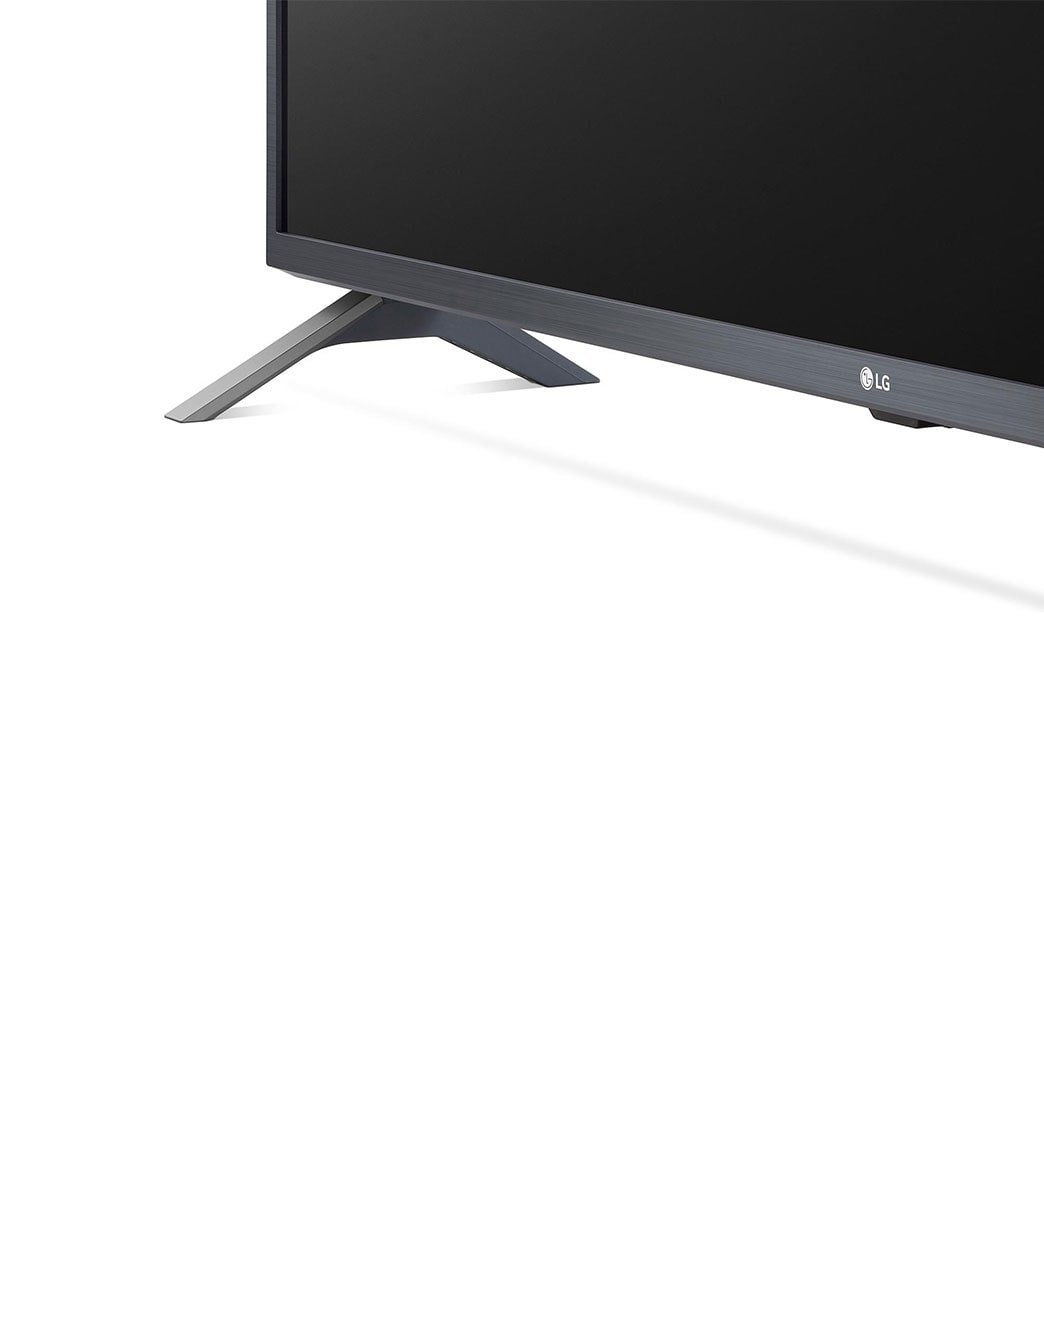 Ripley - LED 50 50UN7300PSC 4K UHD SMART TV 2020